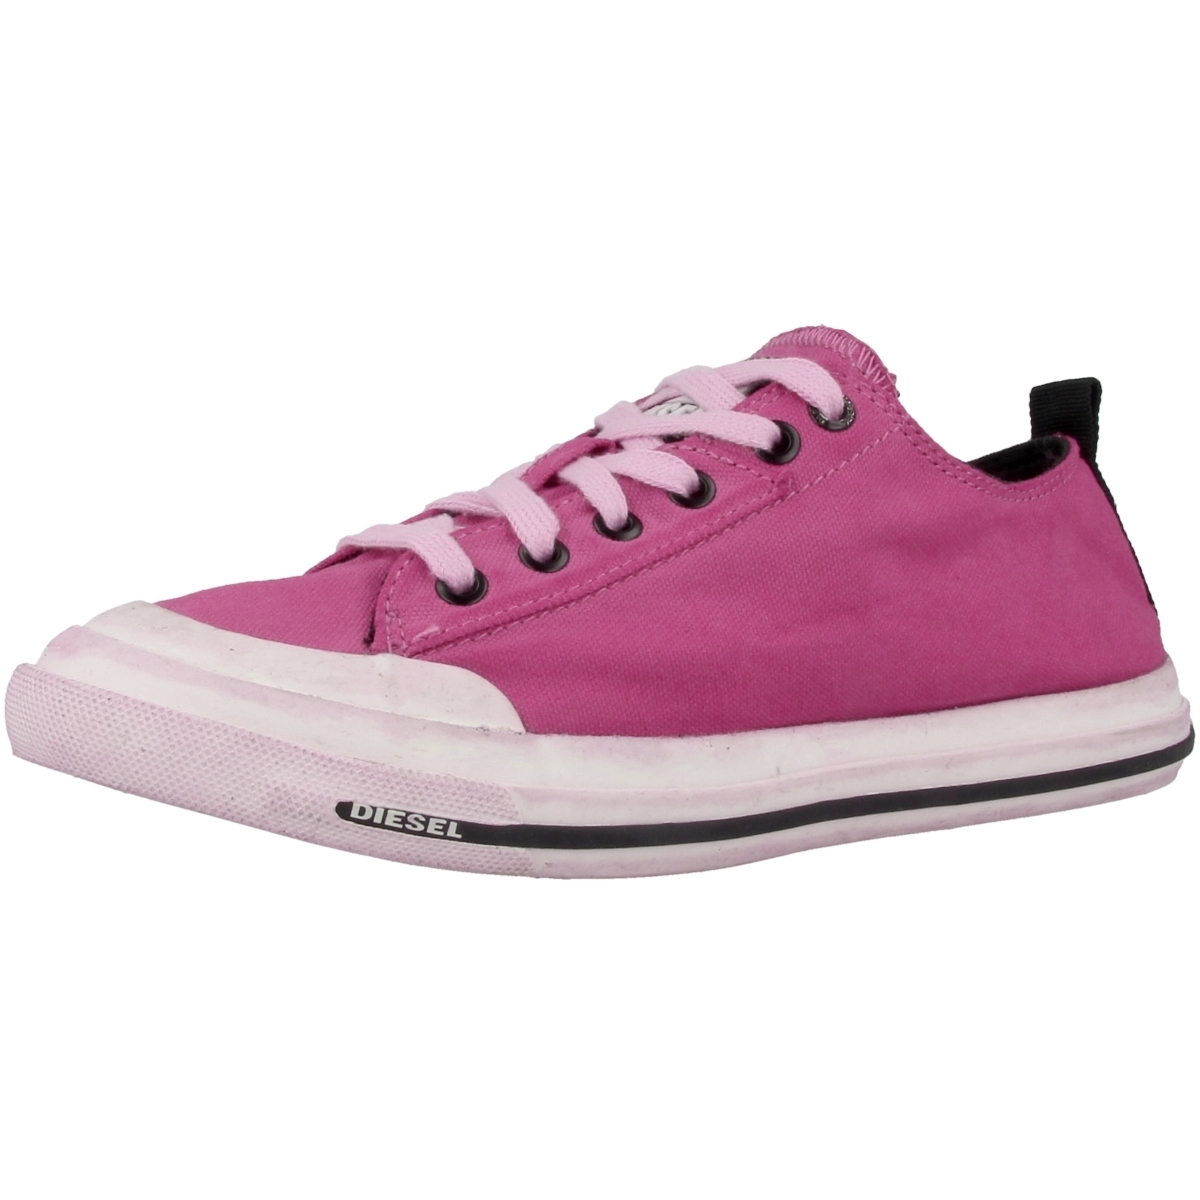 Diesel S-Astico Low Cut W Sneaker pink